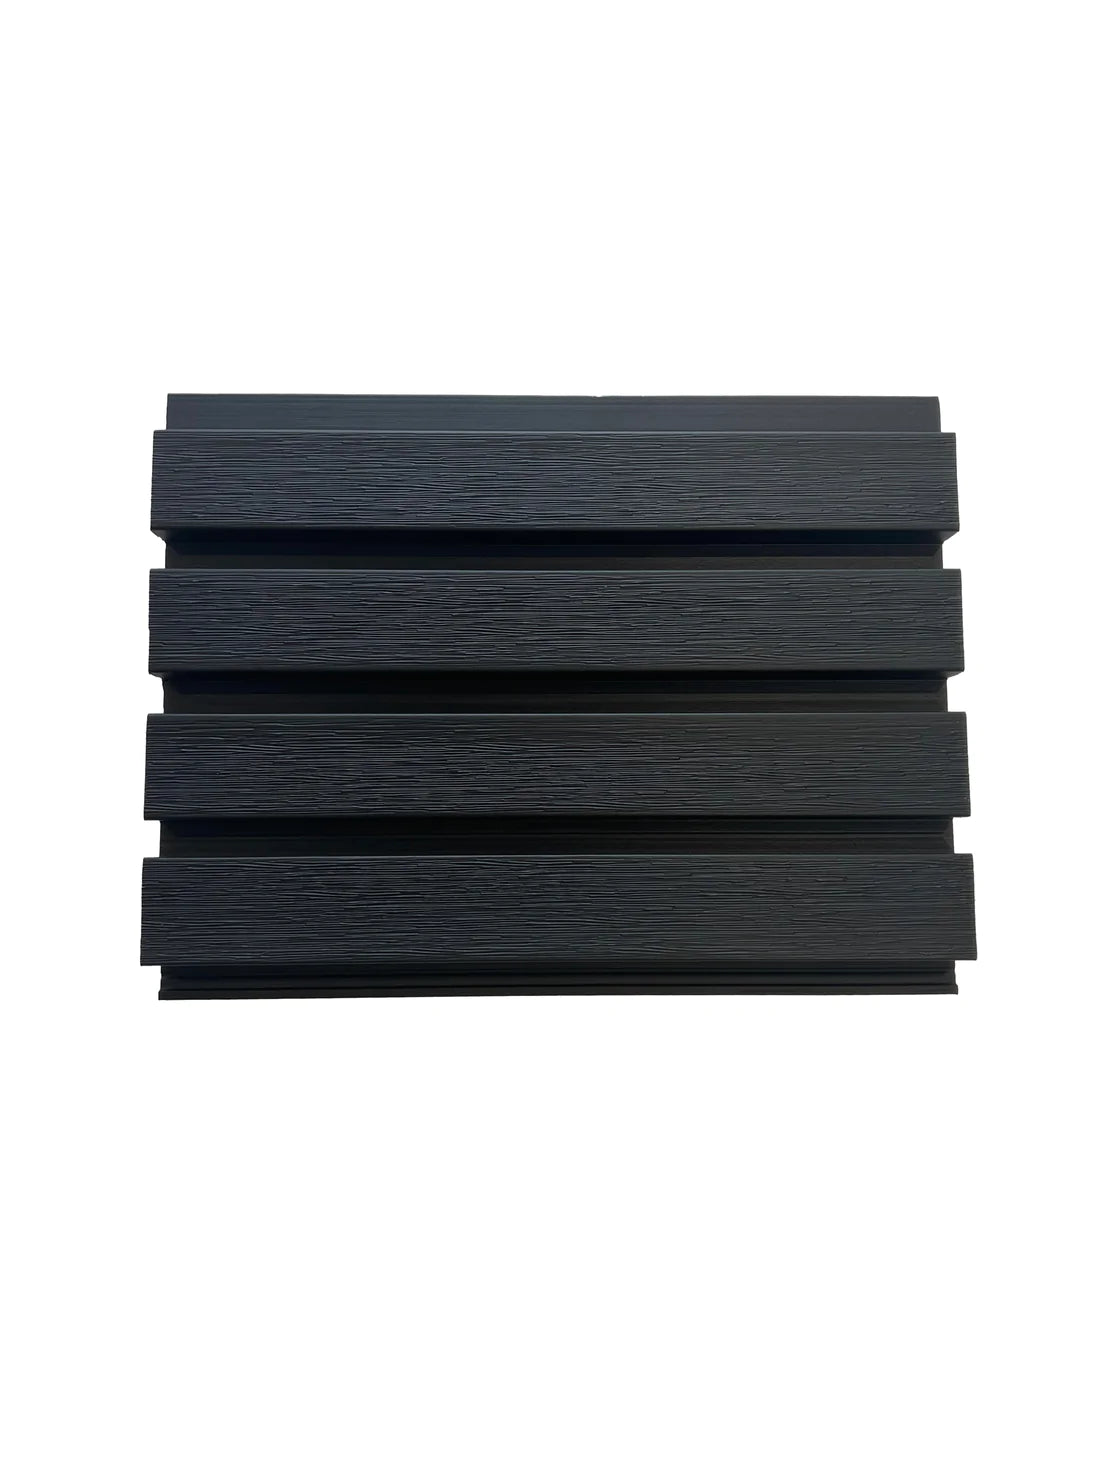 Composite Slatted Cladding – Black - Series 1